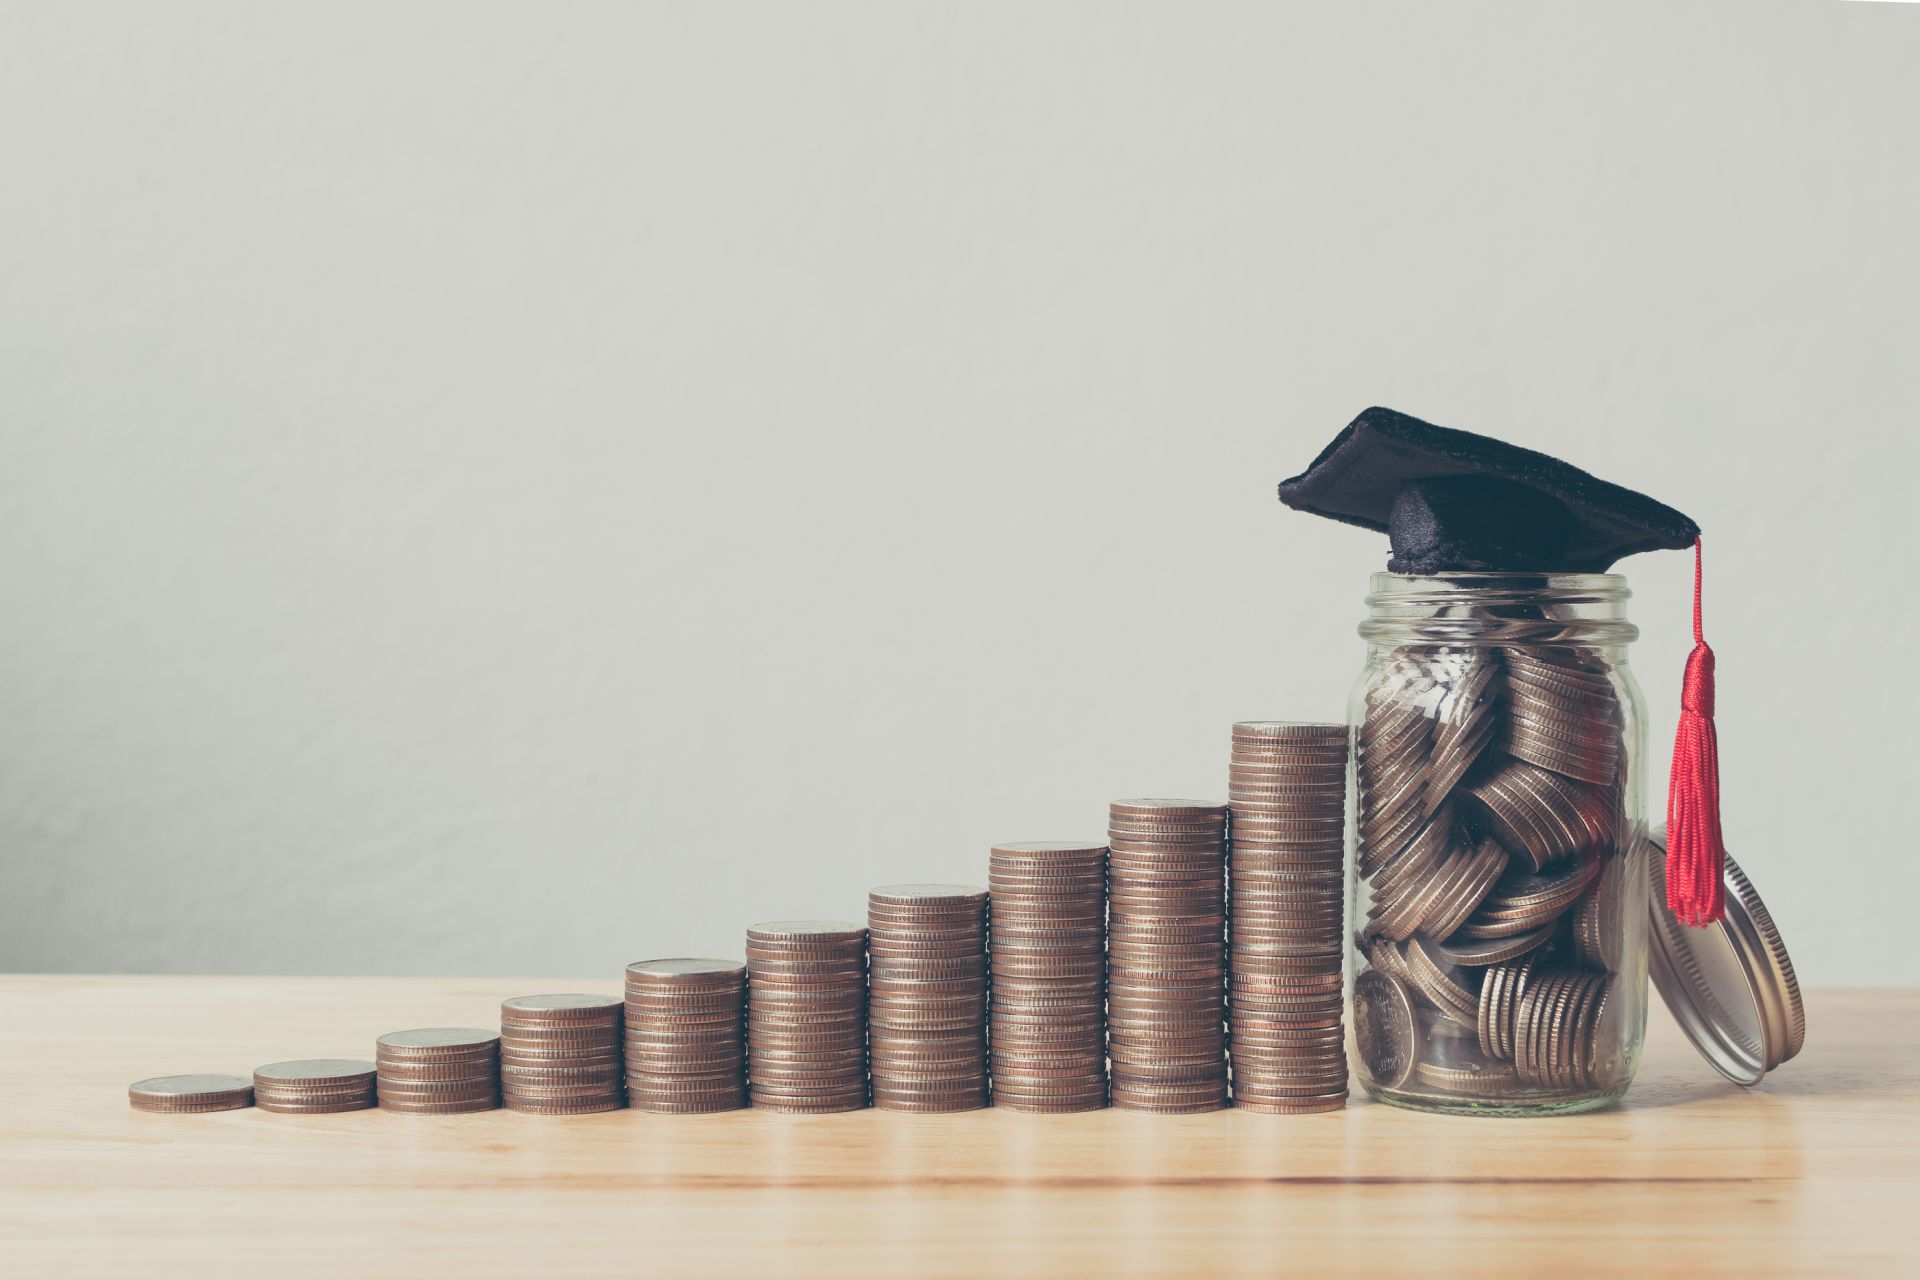 Should Christians support cancelling student loan debt? - WordSlingers